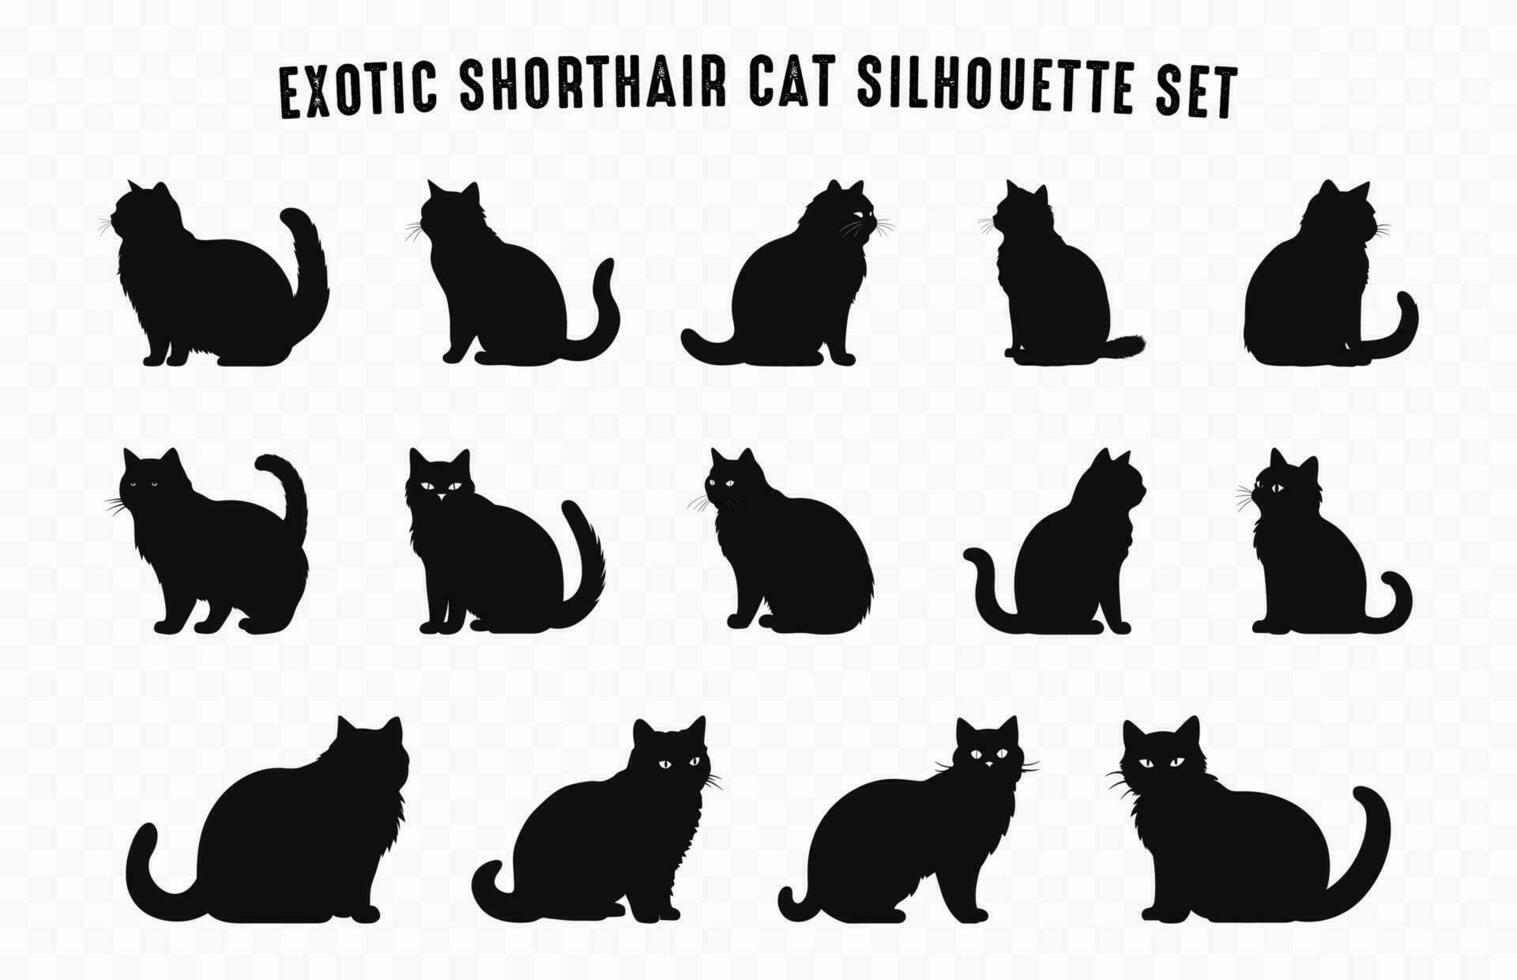 exotisch kurzes Haar Katze Rasse Silhouetten Vektor Satz, schwarz Katzen Silhouette Sammlung